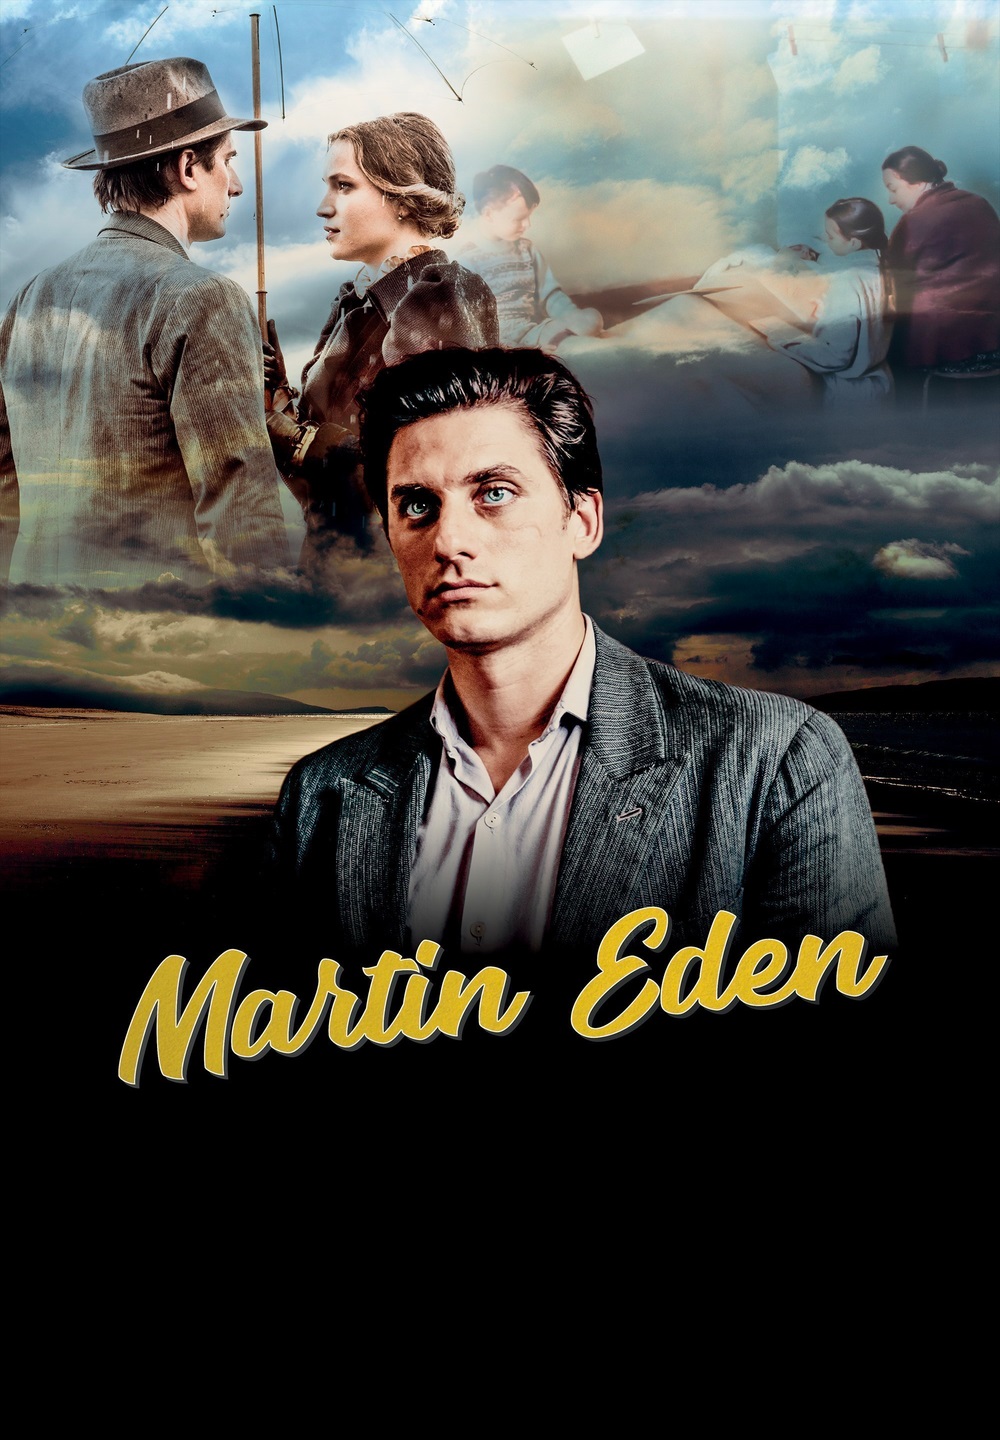 Martin Eden [HD] (2019)